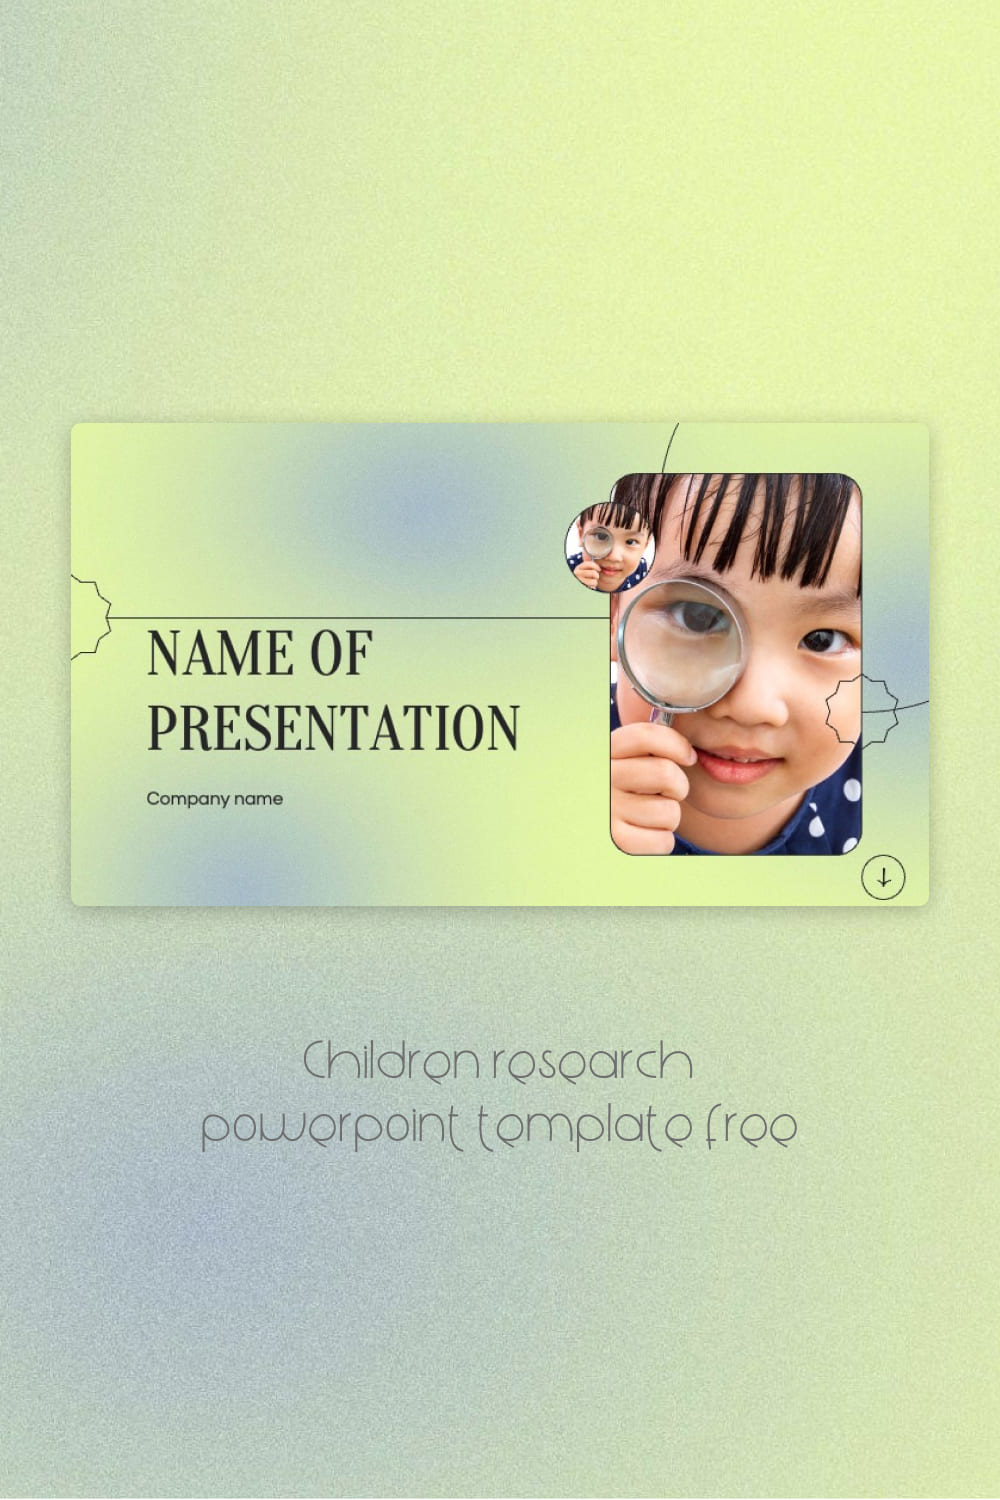 Children Research Powerpoint Template Free Pinterest.